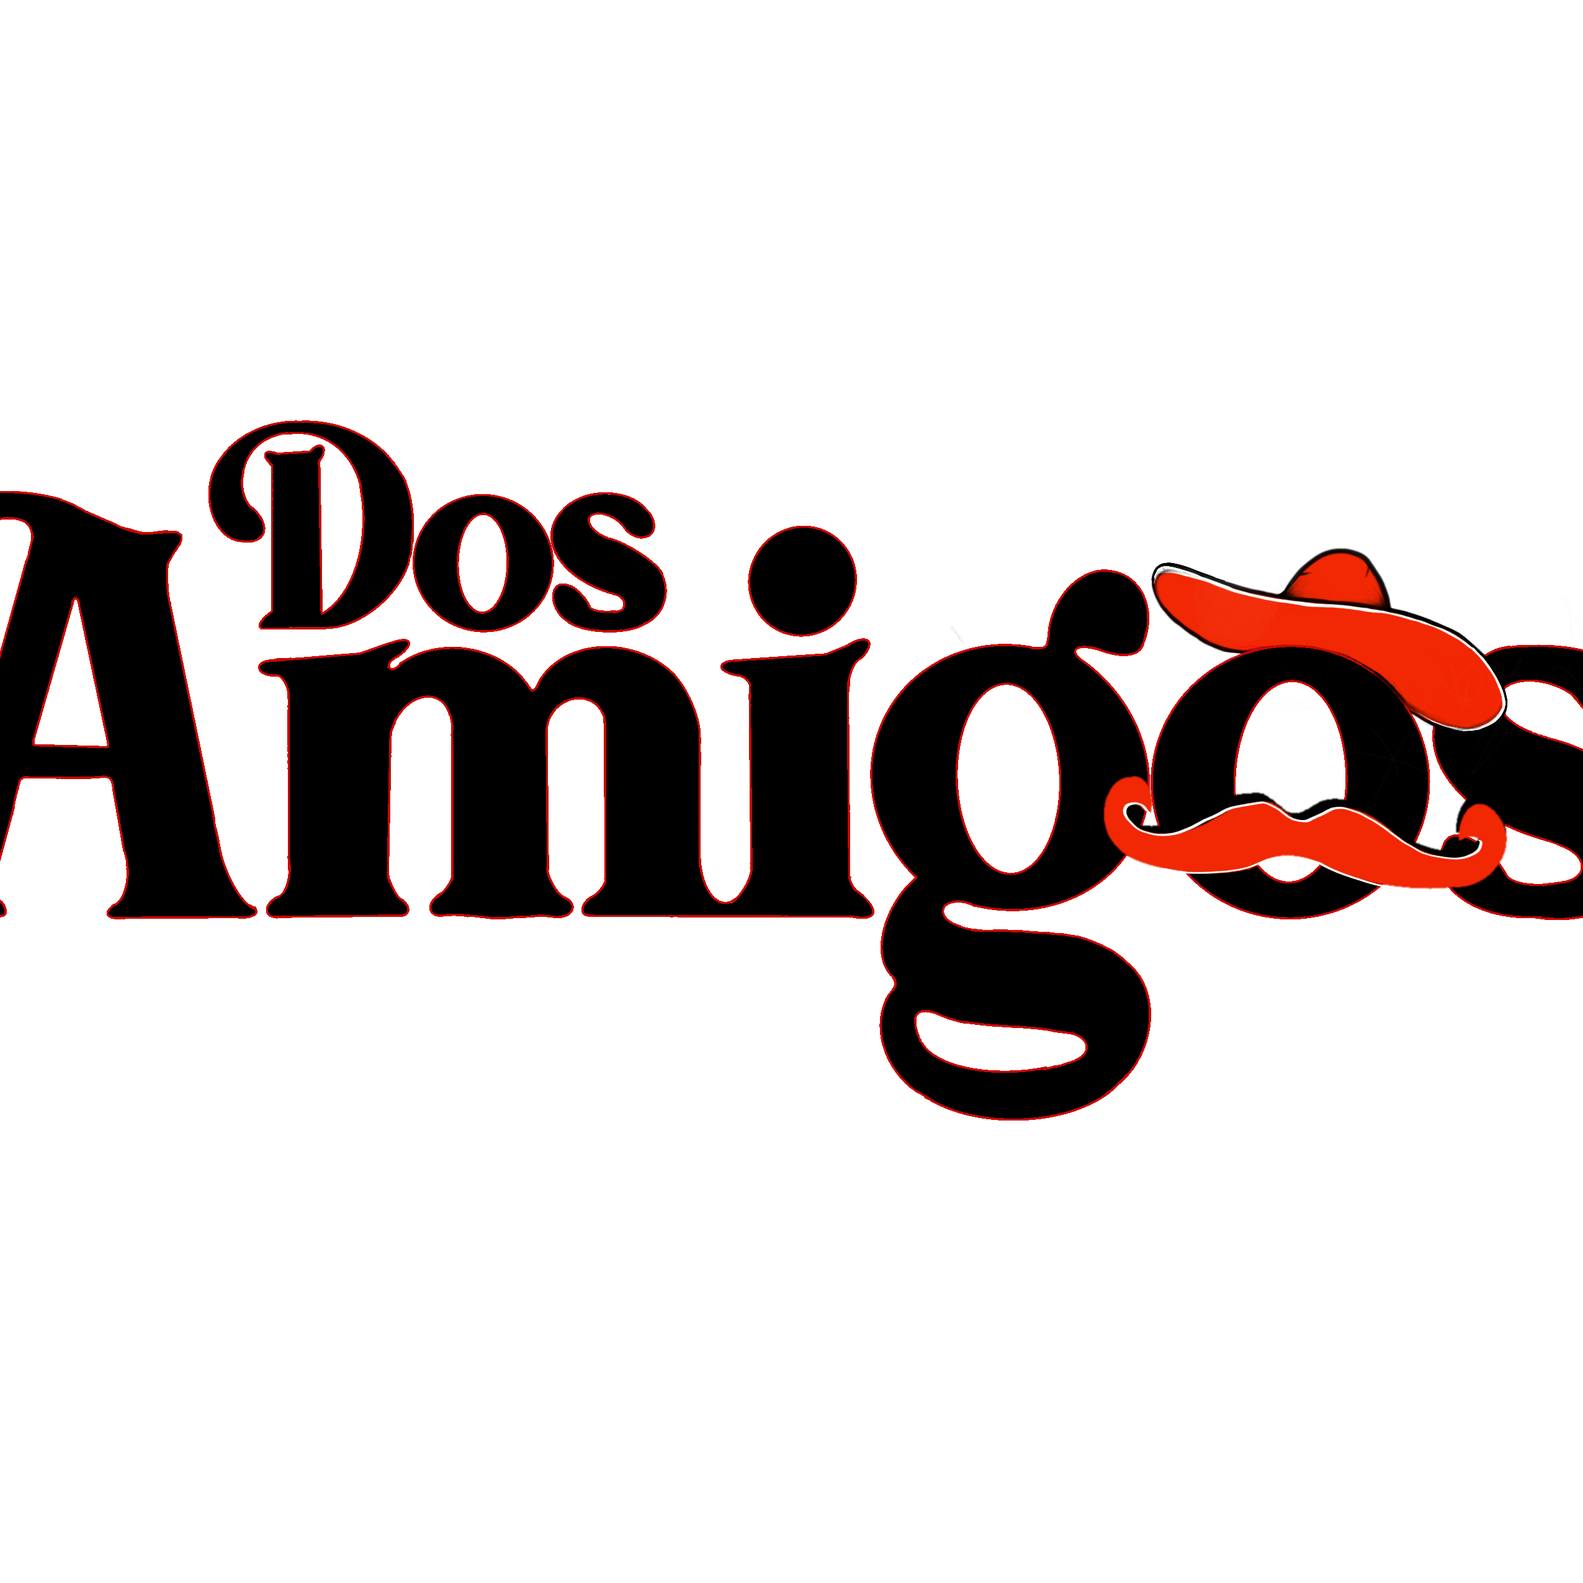 AMIGO logo, Vector Logo of AMIGO brand free download (eps, ai, png, cdr)  formats